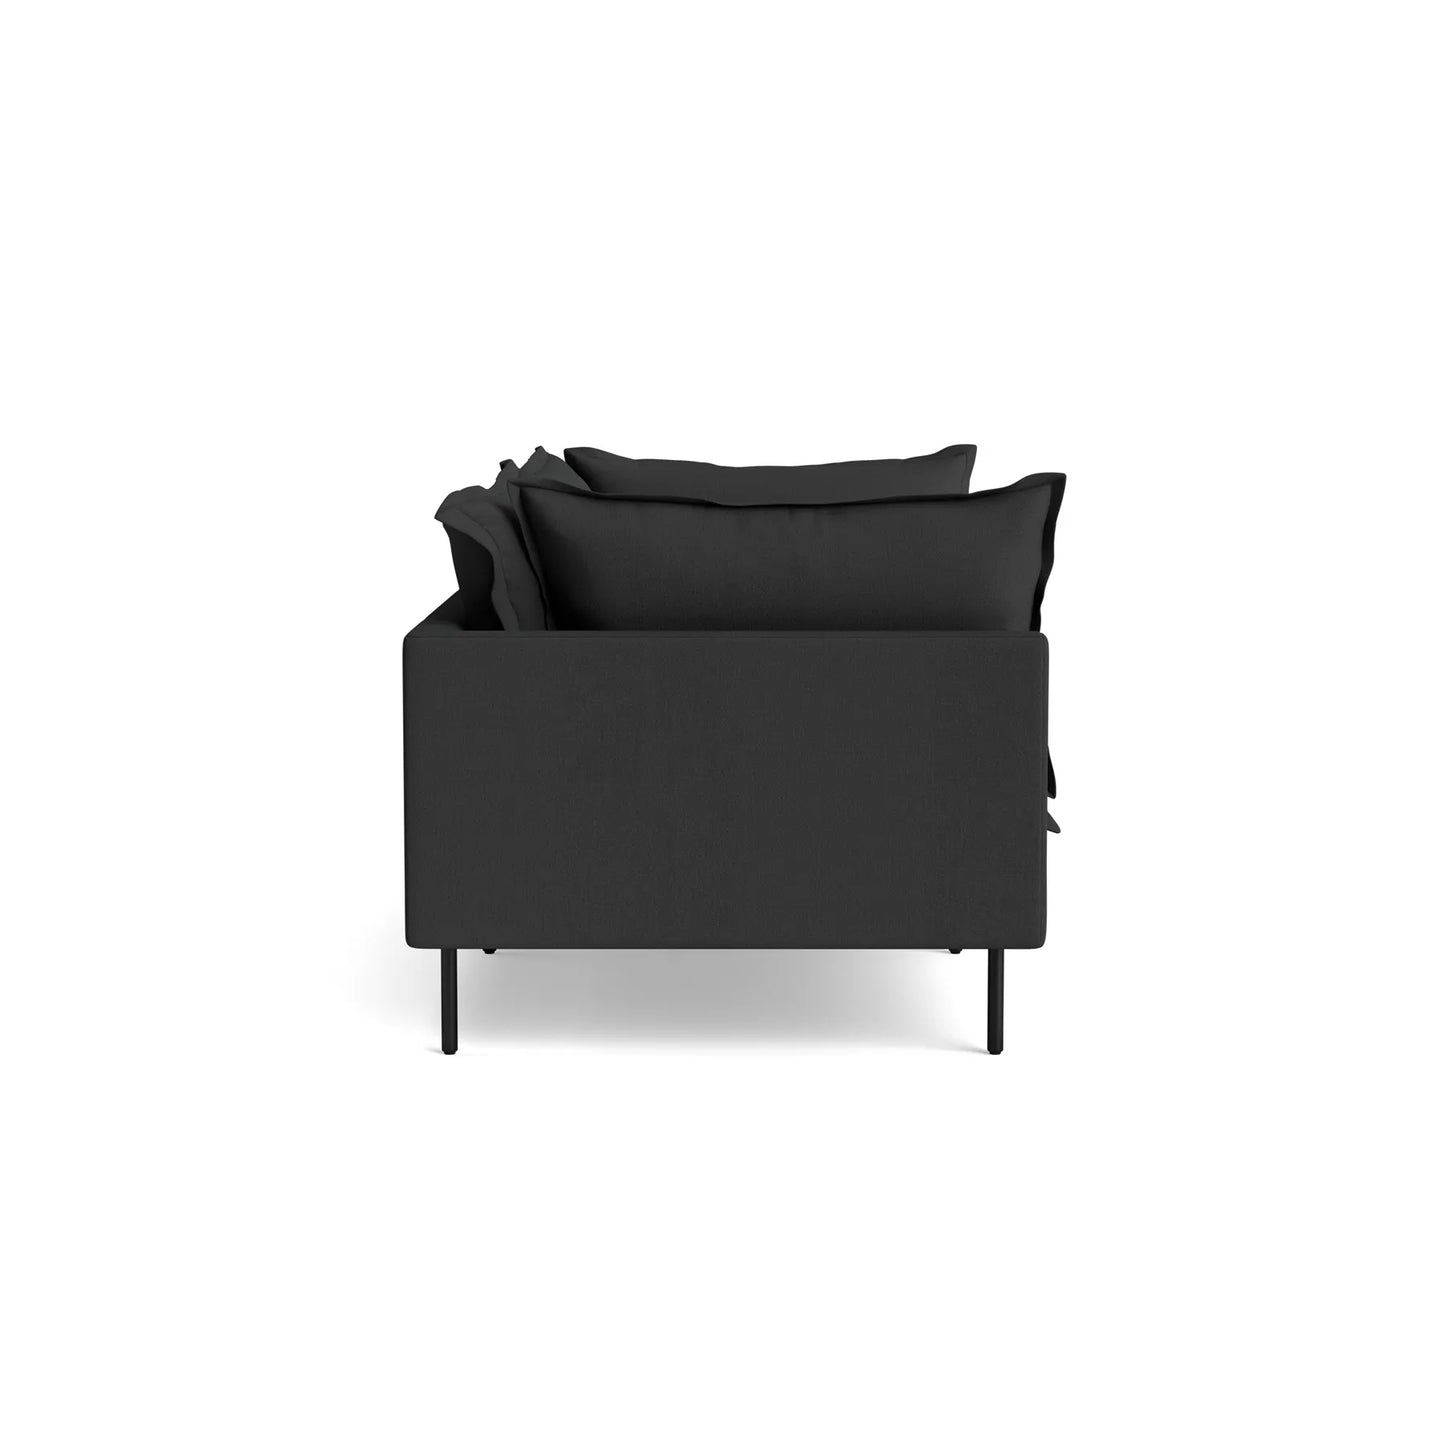 Seam 3 Seater Sofa - Siena Charcoal